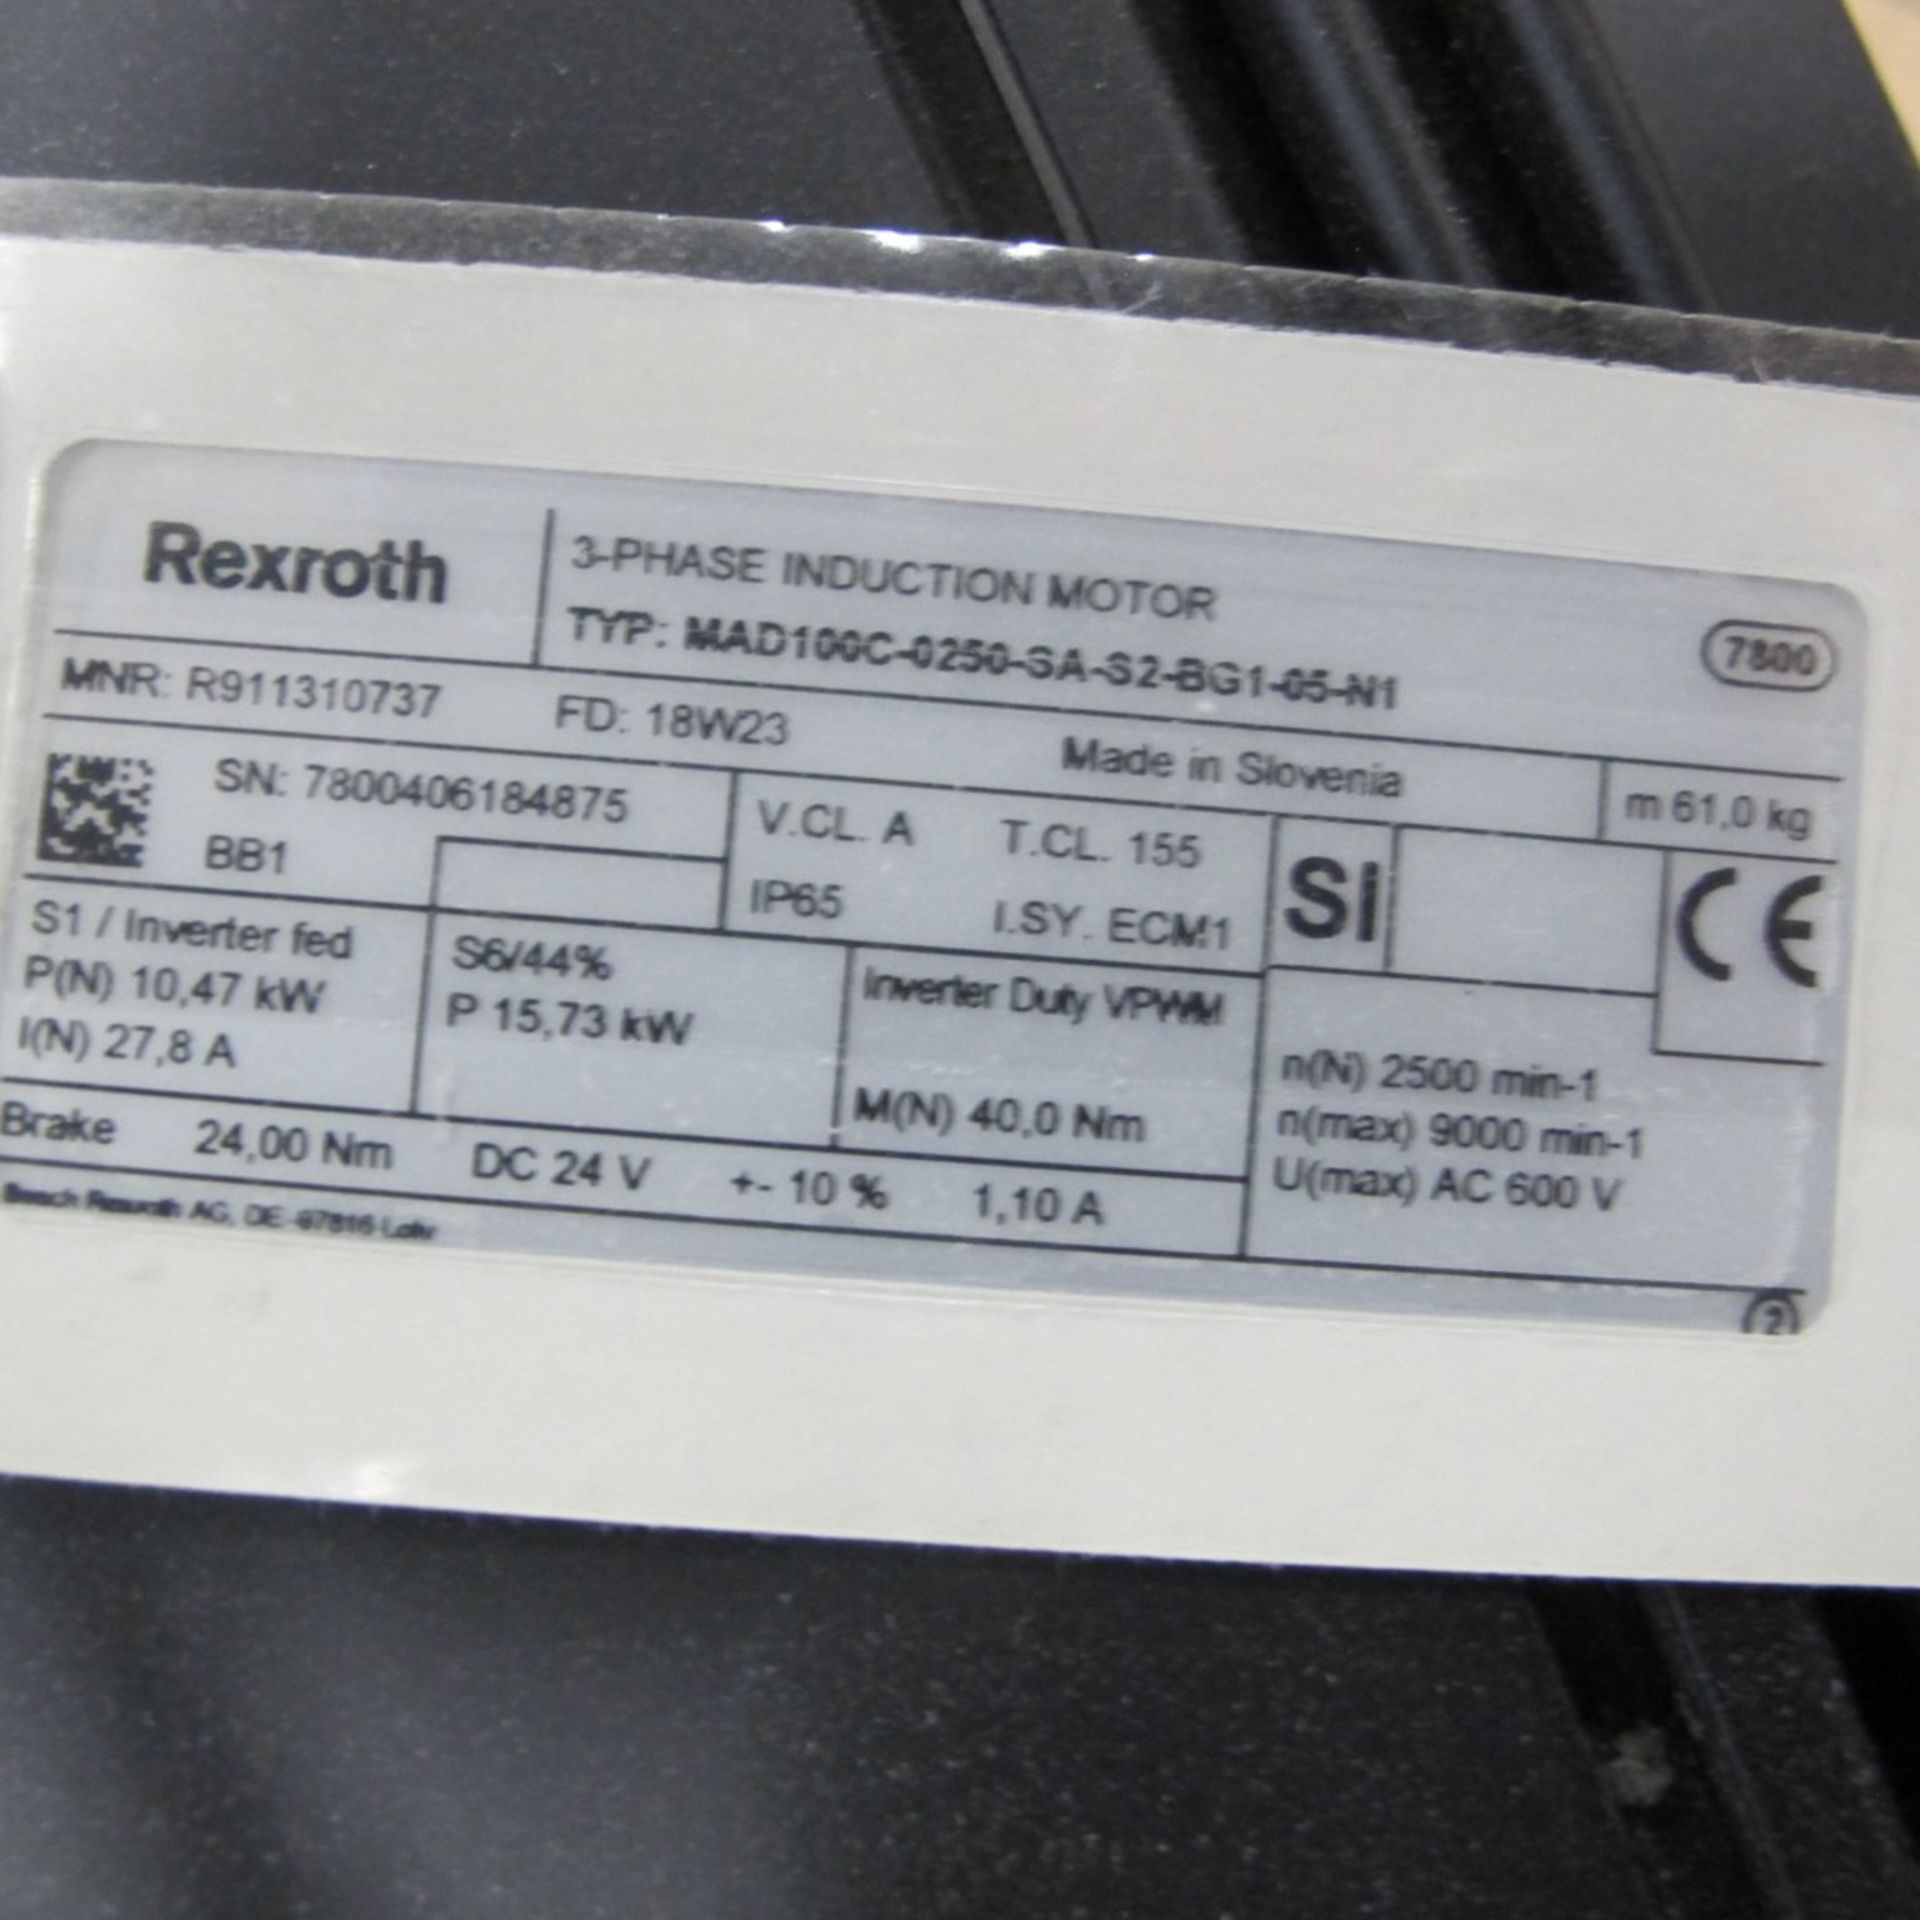 REXROTH SERVO DRIVE 3 PHASE INDUCTION MOTOR, MAD100C-0250-SA-S2-BG1-05-N1, AC600V, 15,73KW, 2,500/ - Image 3 of 3